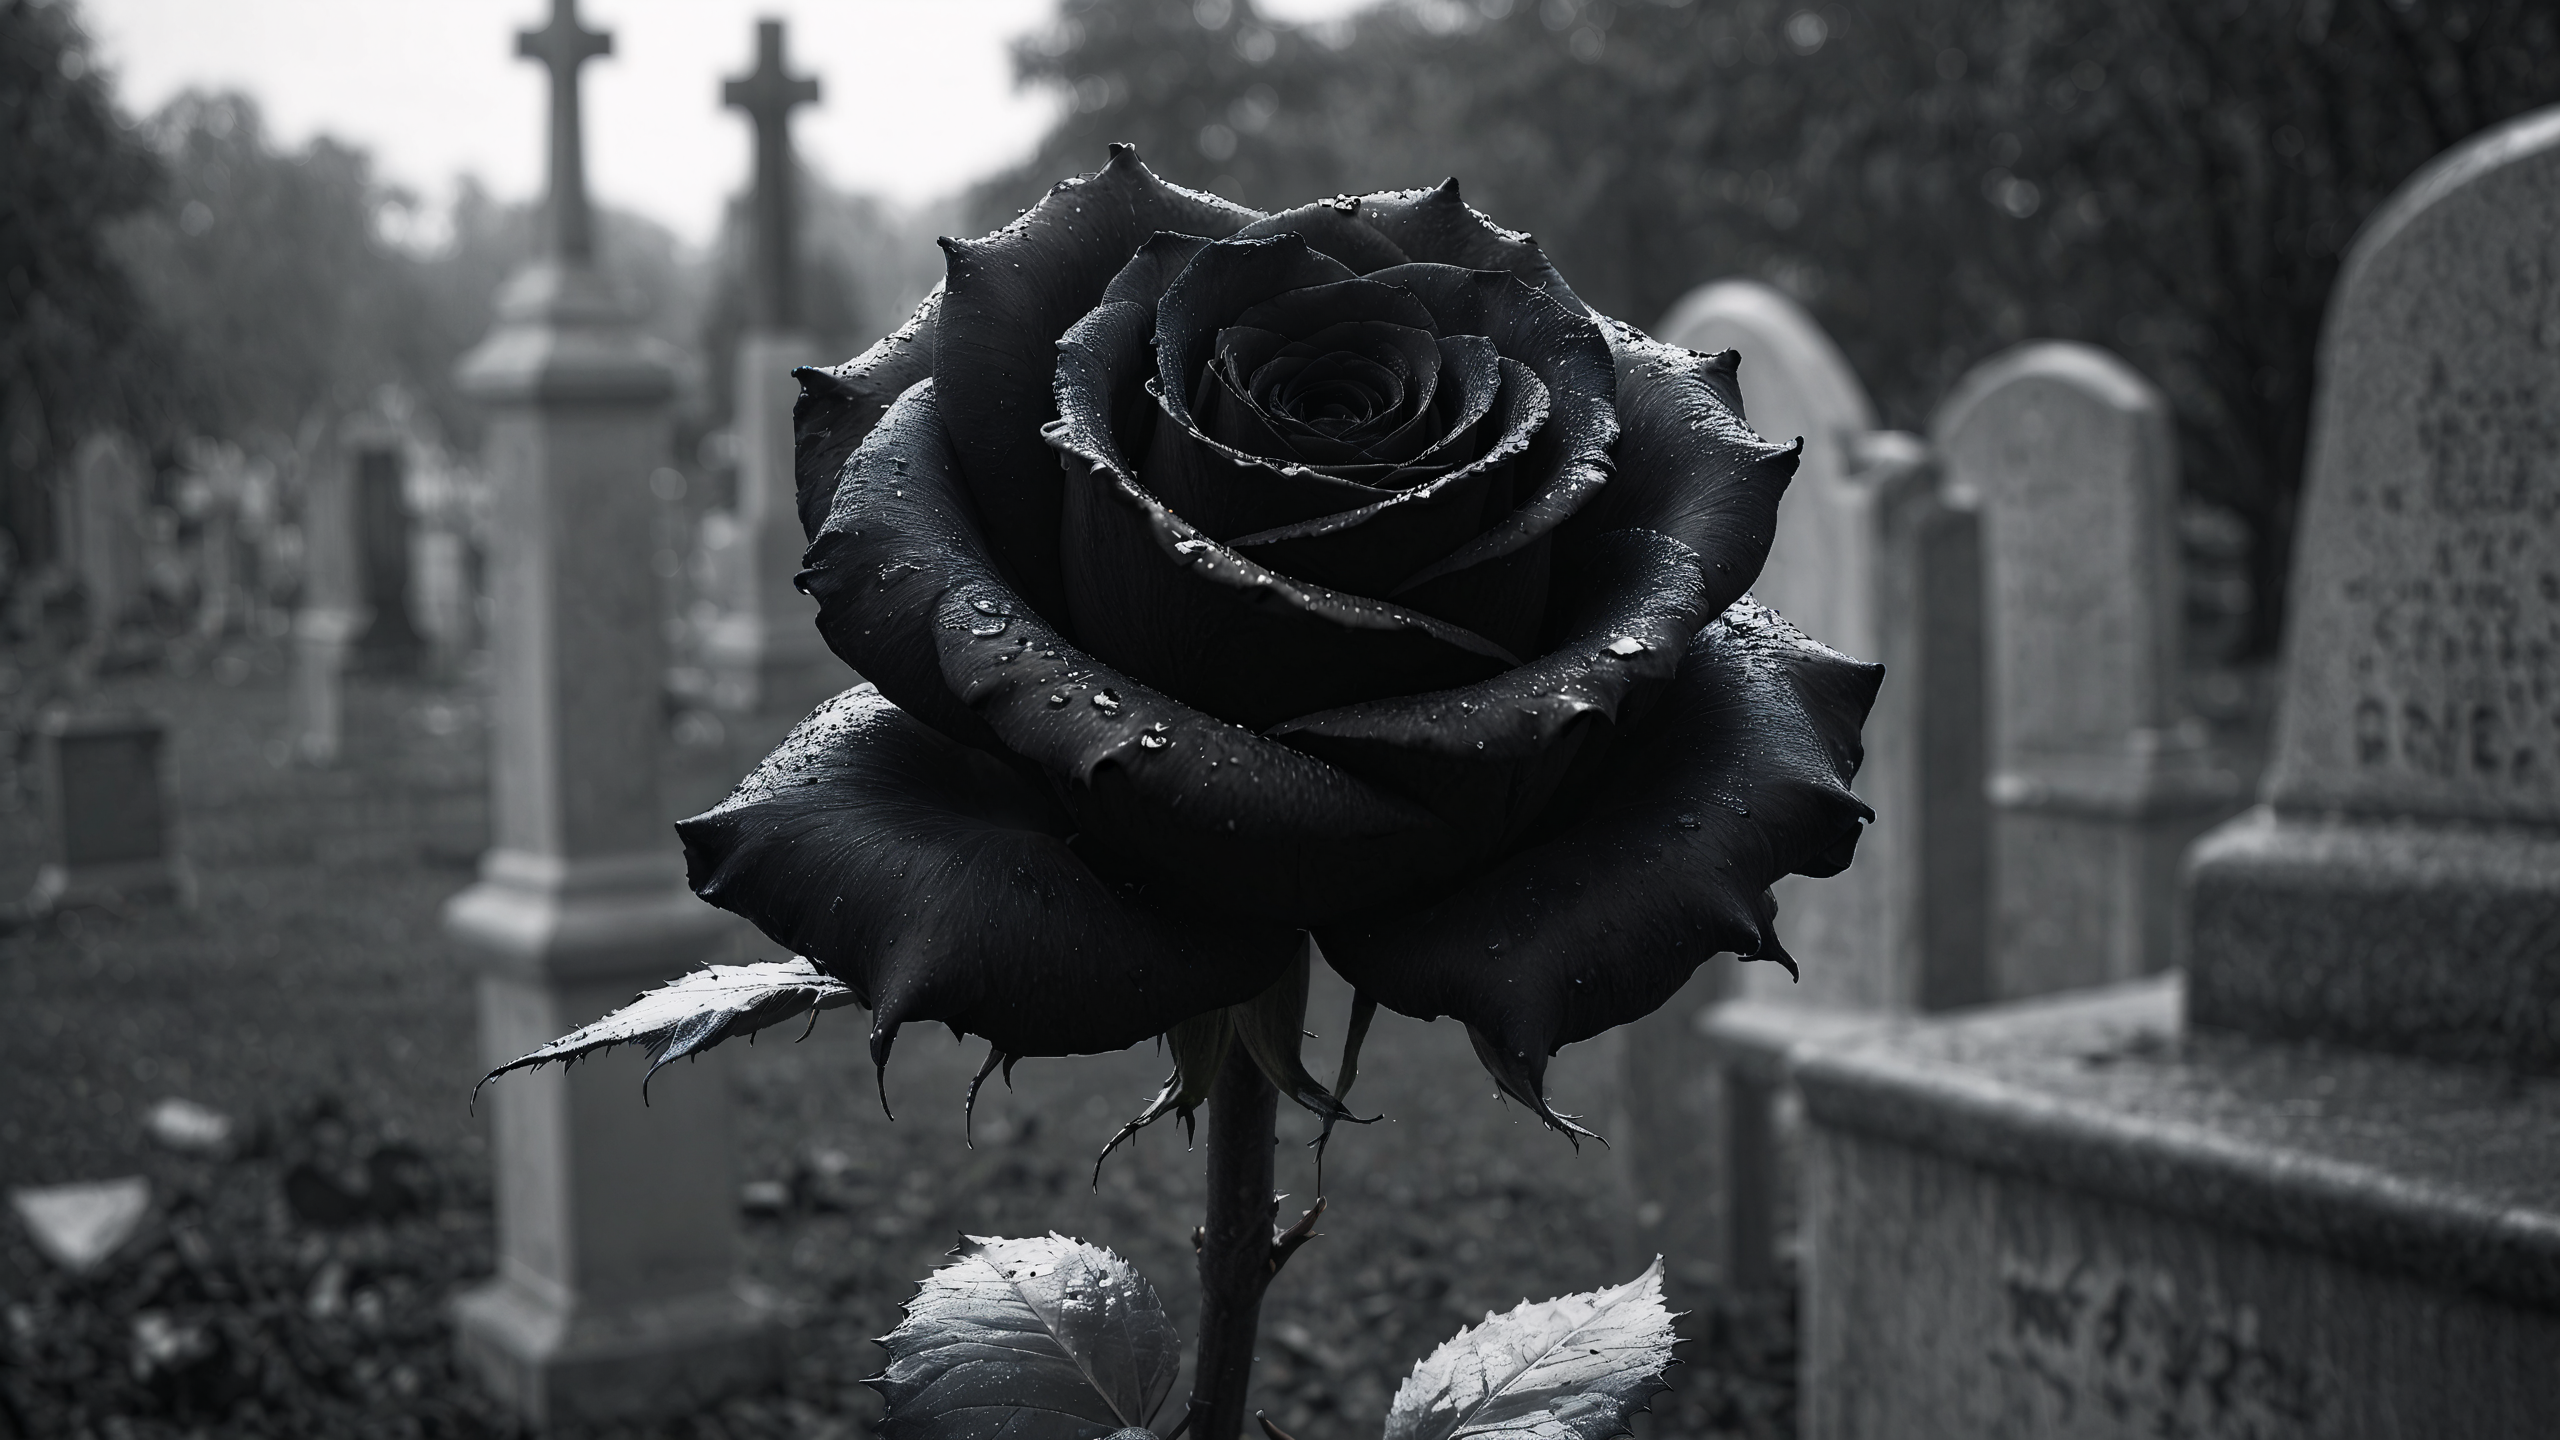 General 2560x1440 rose grave dark monochrome black rose AI art blurry background depth of field closeup leaves graveyards tombstones wet